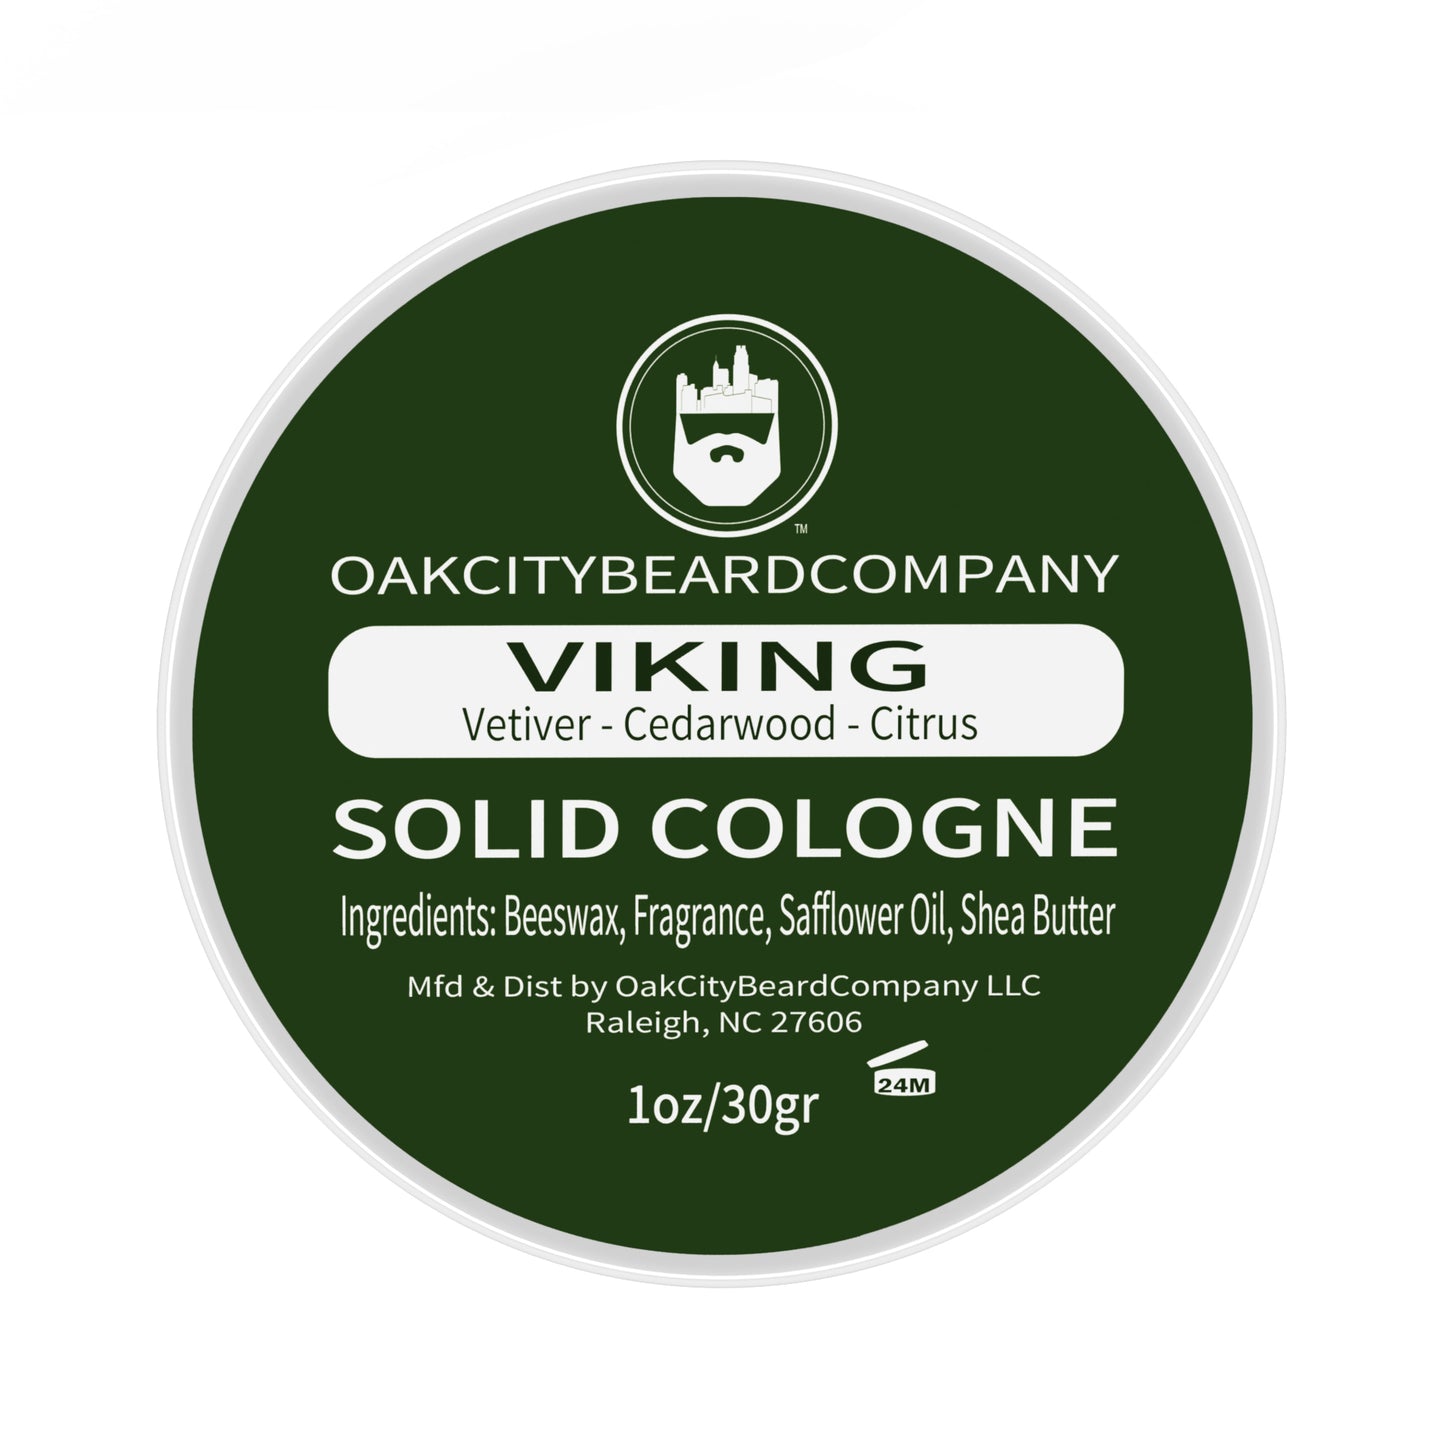 Viking (Solid Cologne) by Oak City Beard Company